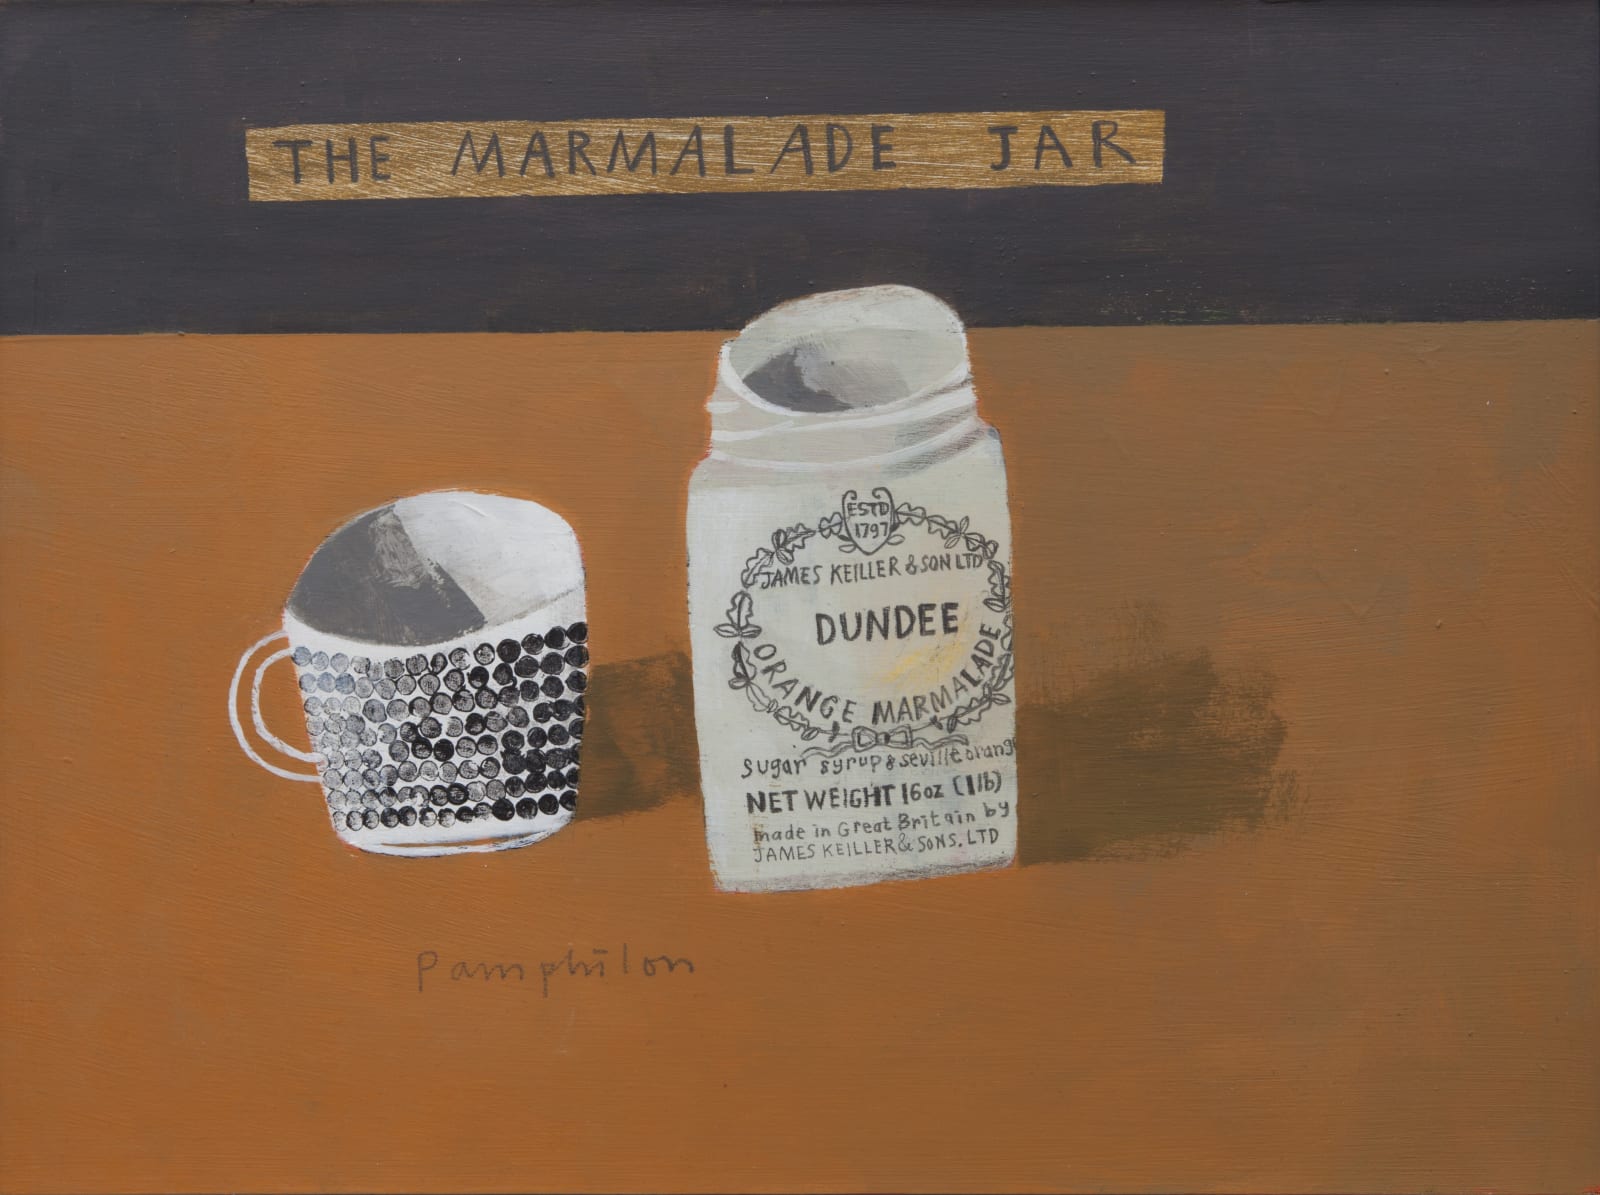 Elaine Pamphilon, The Marmalade Jar